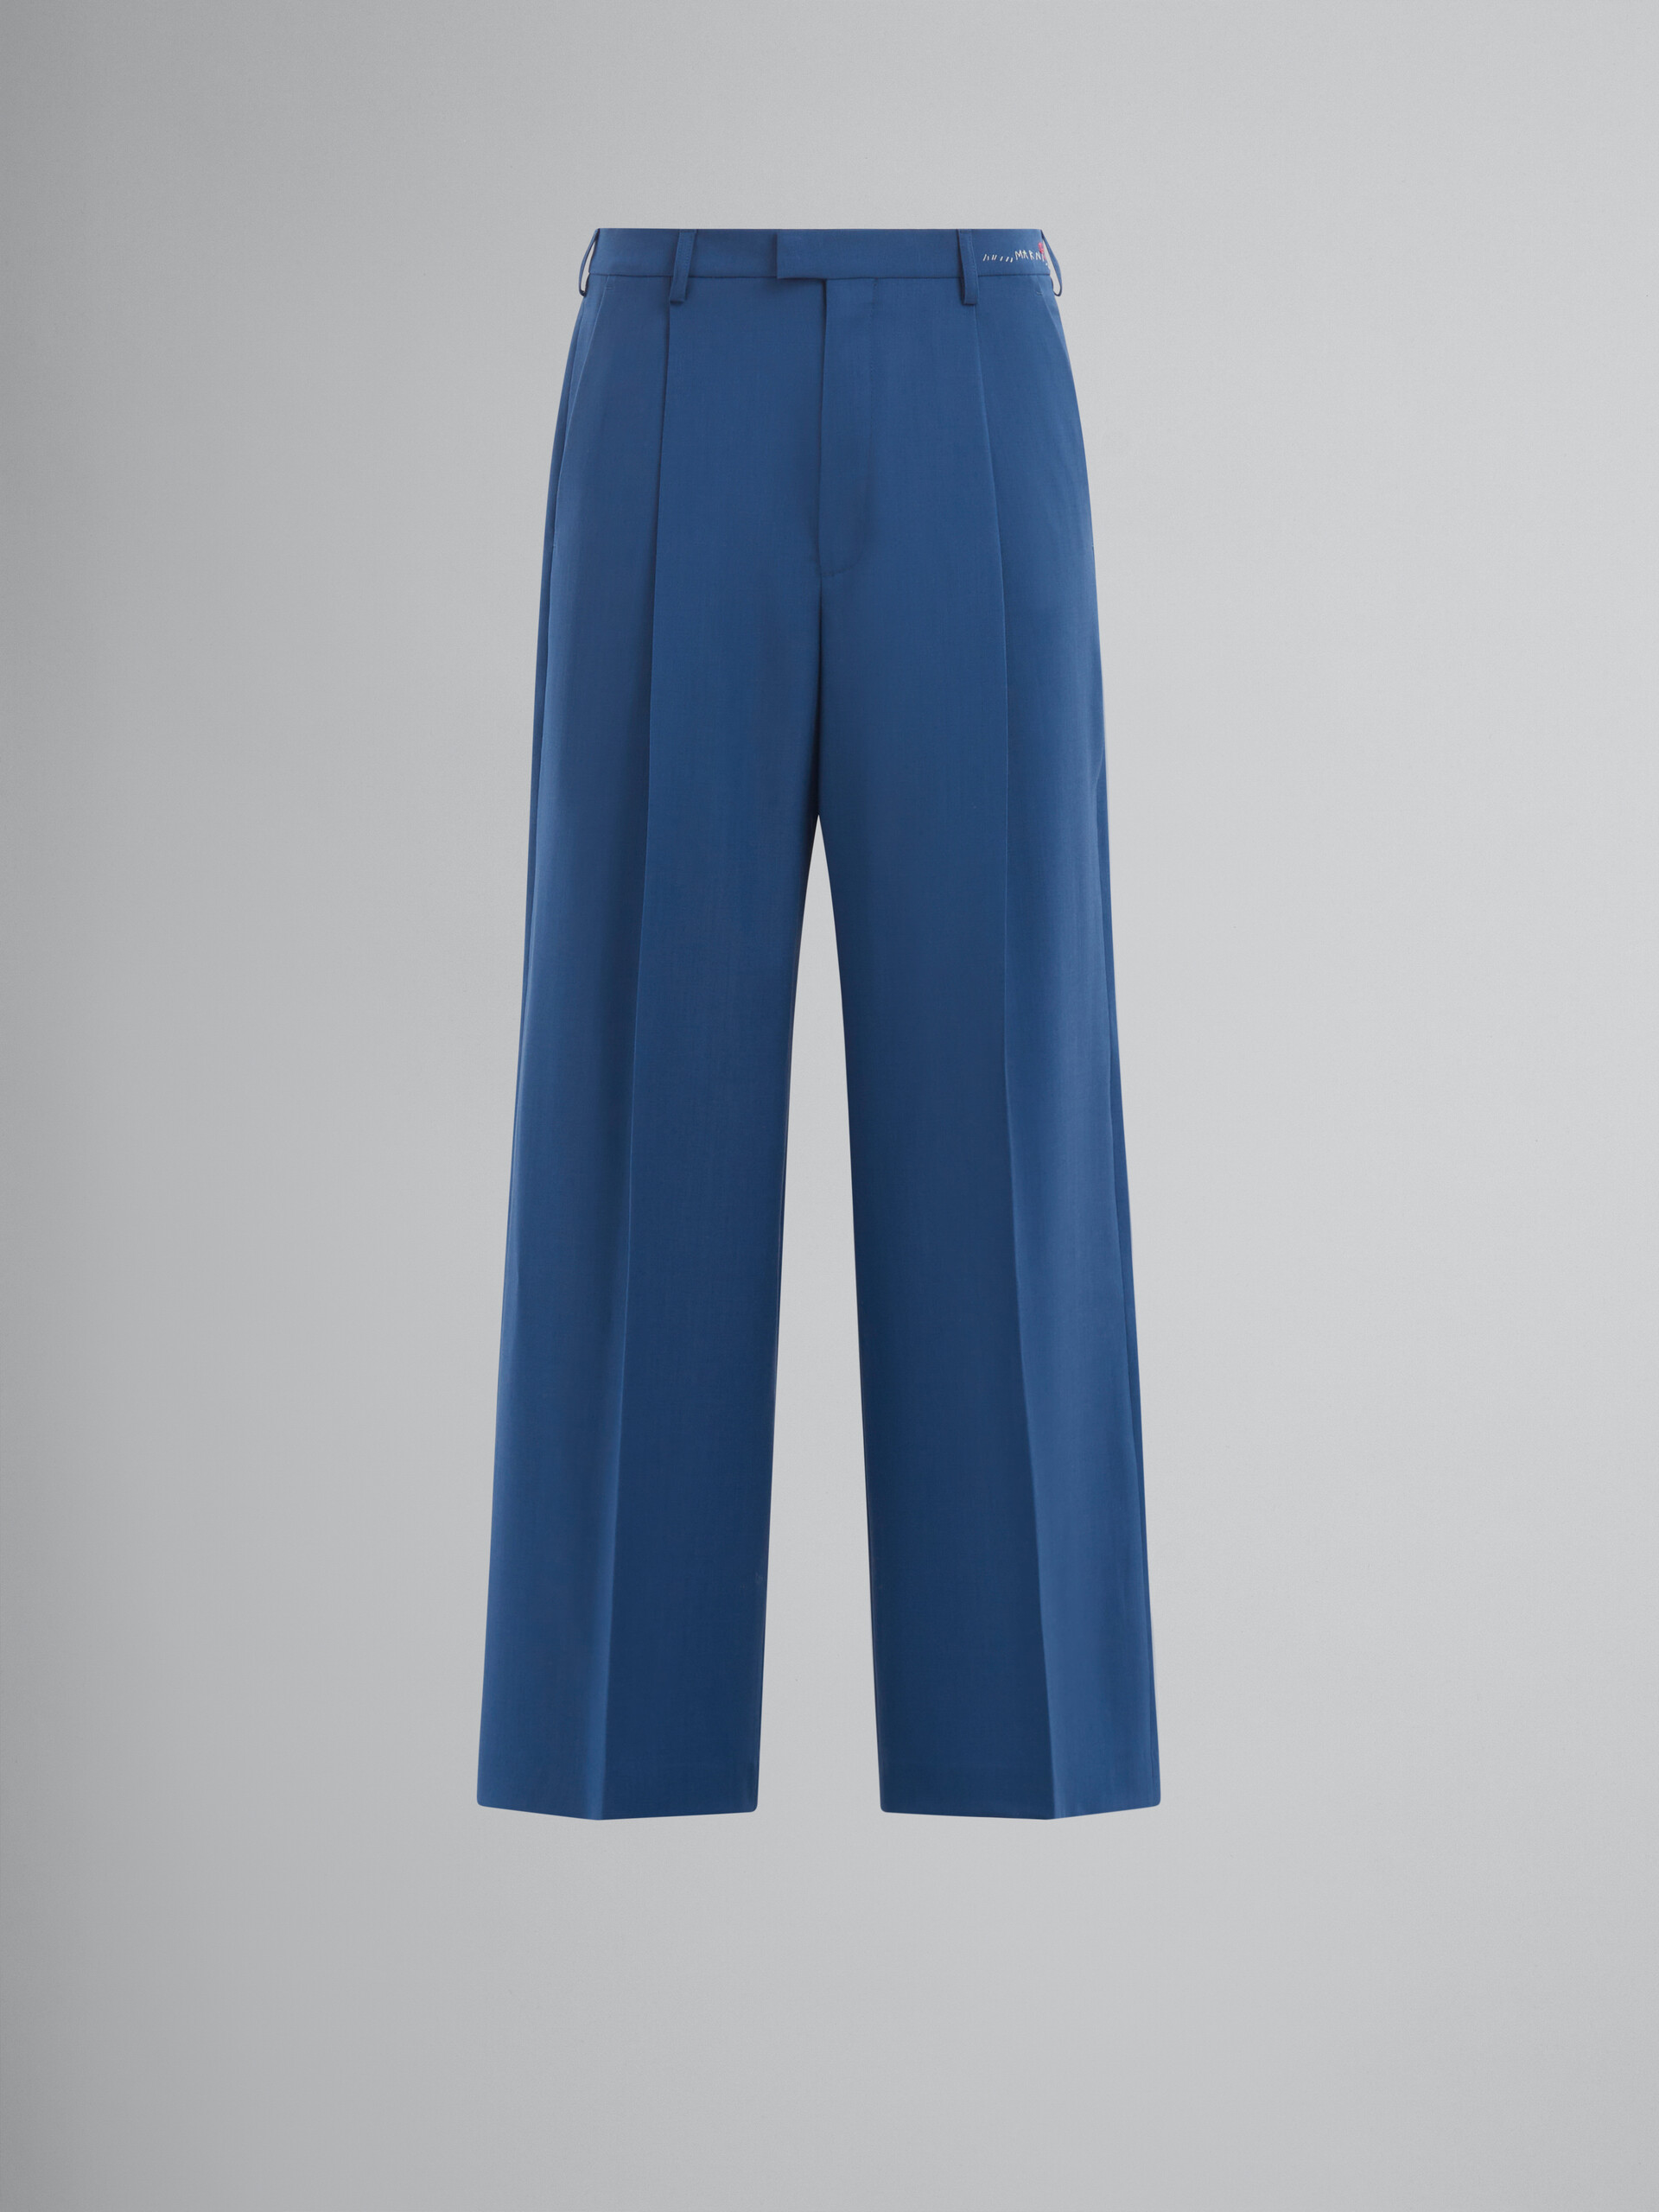 Pantalon en laine mohair bleue avec plis - Pantalons - Image 1